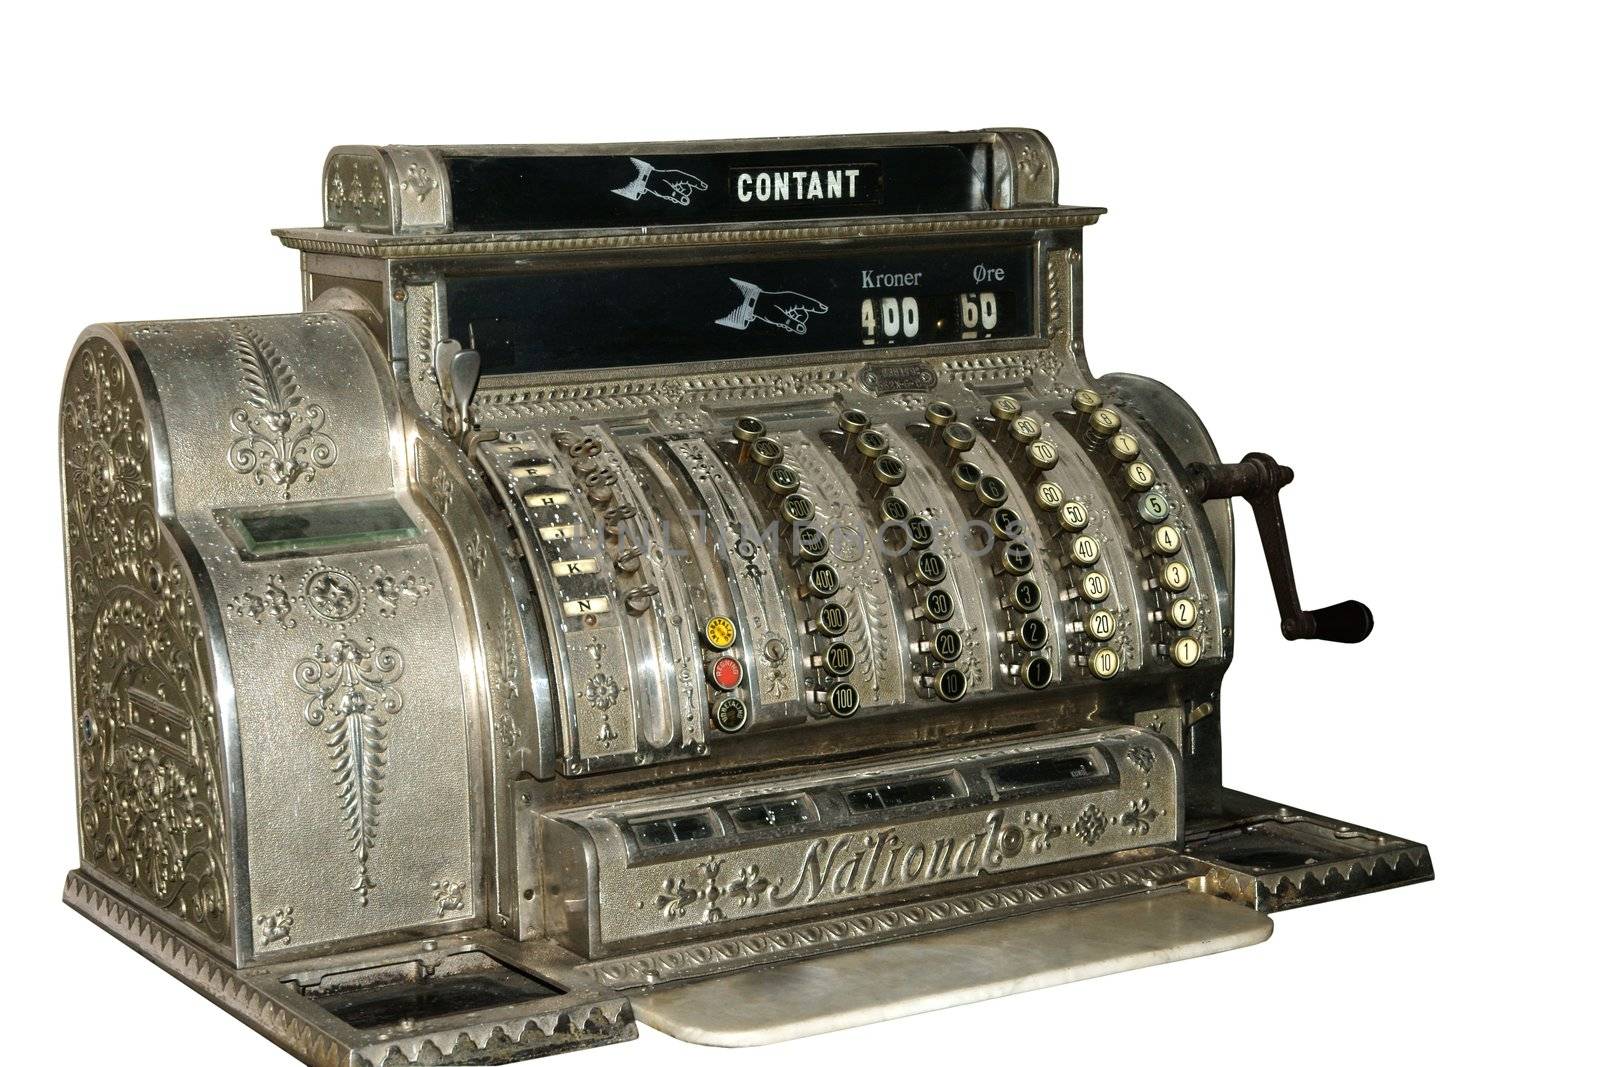 Vintage Cash Register isolated on white background